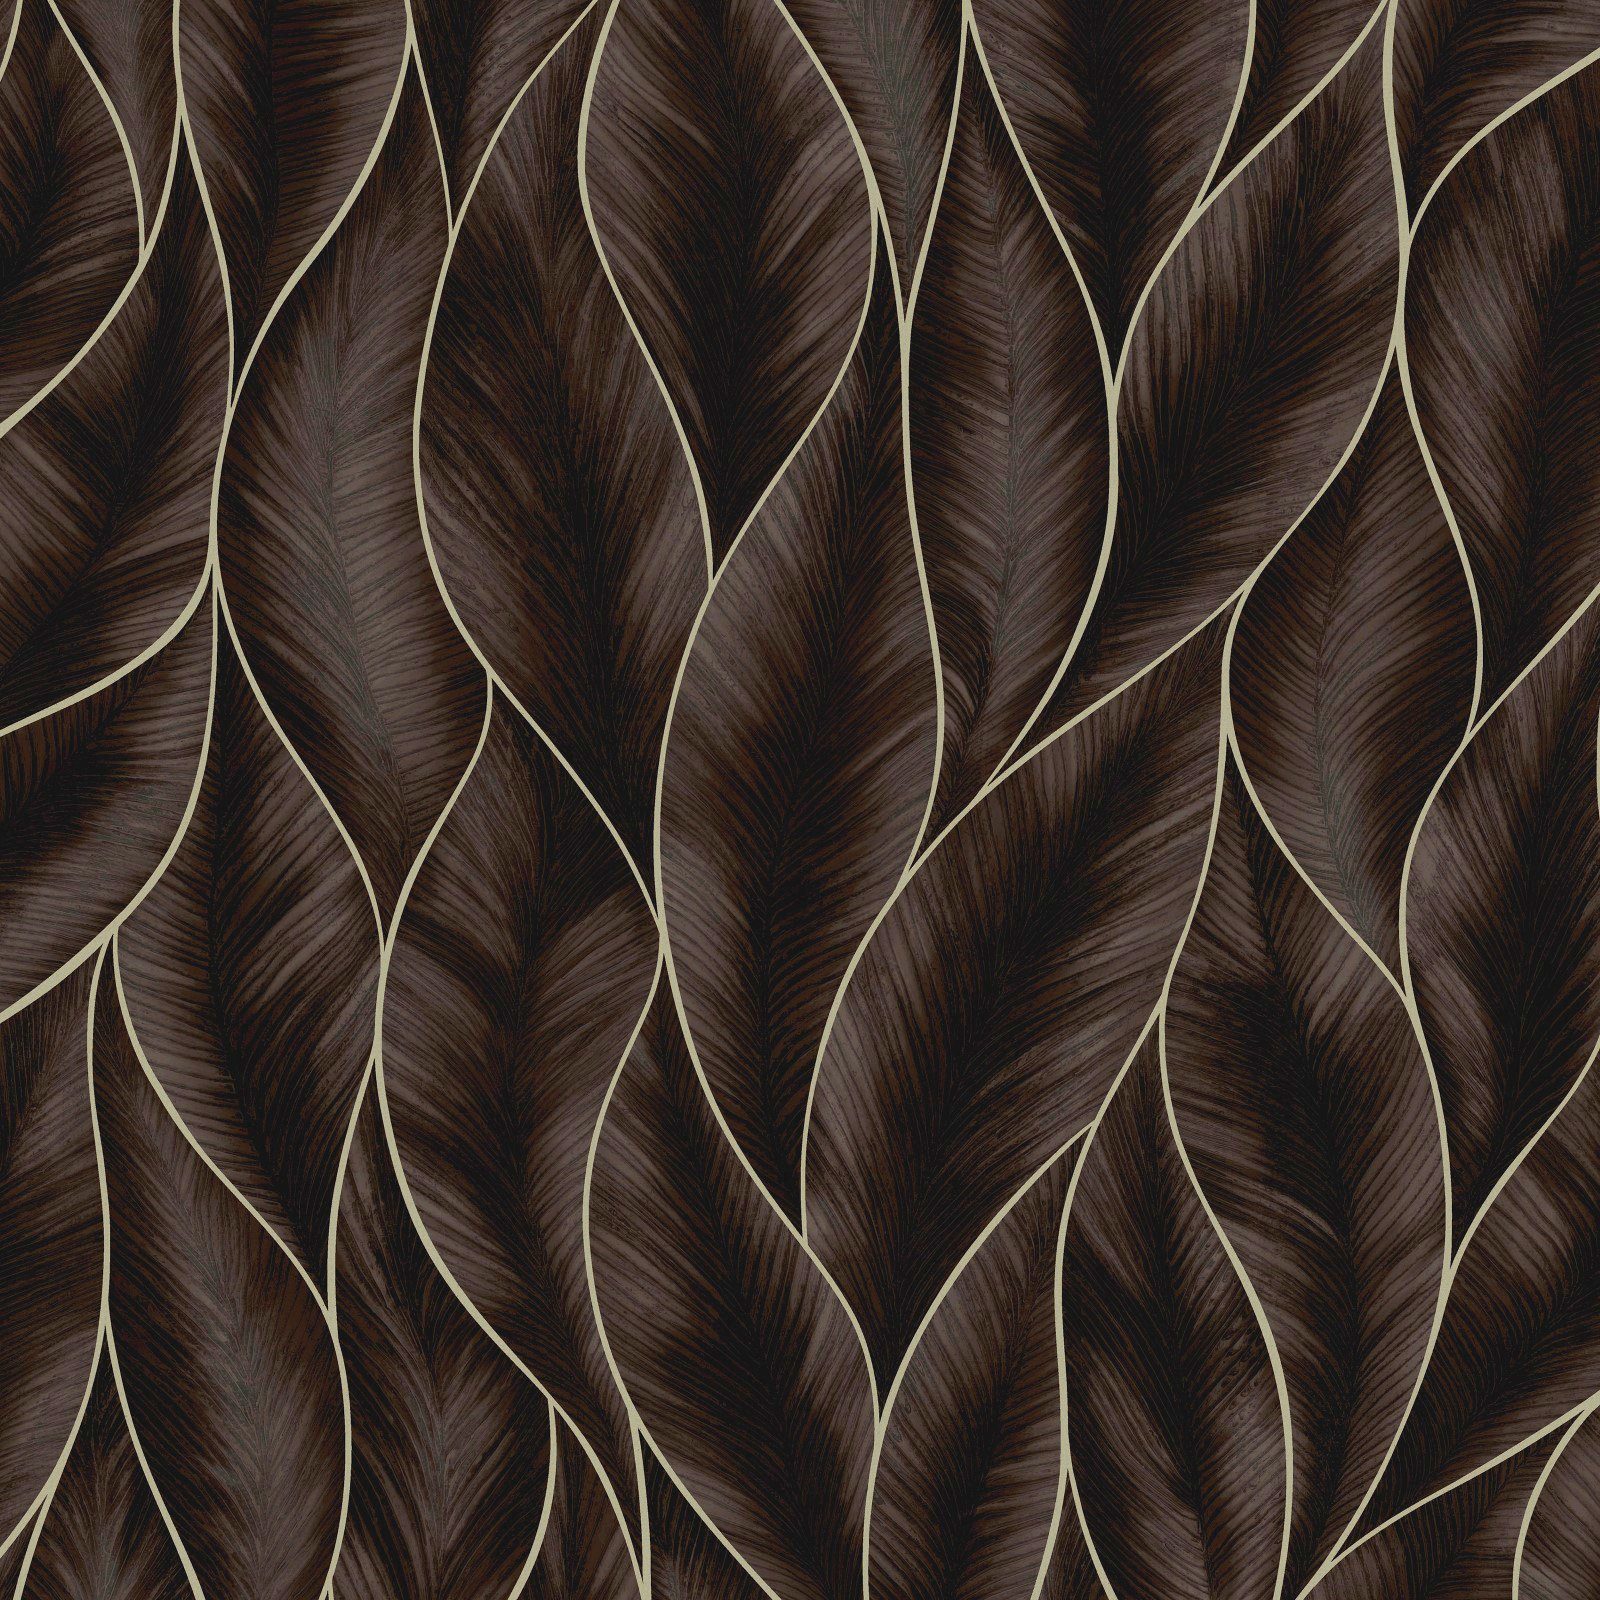 WOW Vliestapete Subtil Blätter bronze, FSC® zertifiziert, mit lebhaftem Druck, 10 Meter Länge